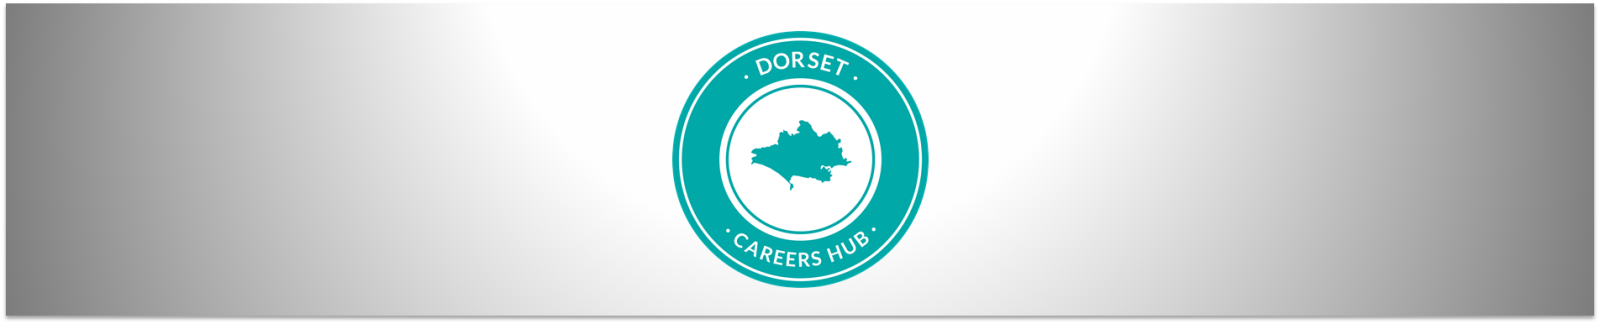 Dorset Careers Hub logo